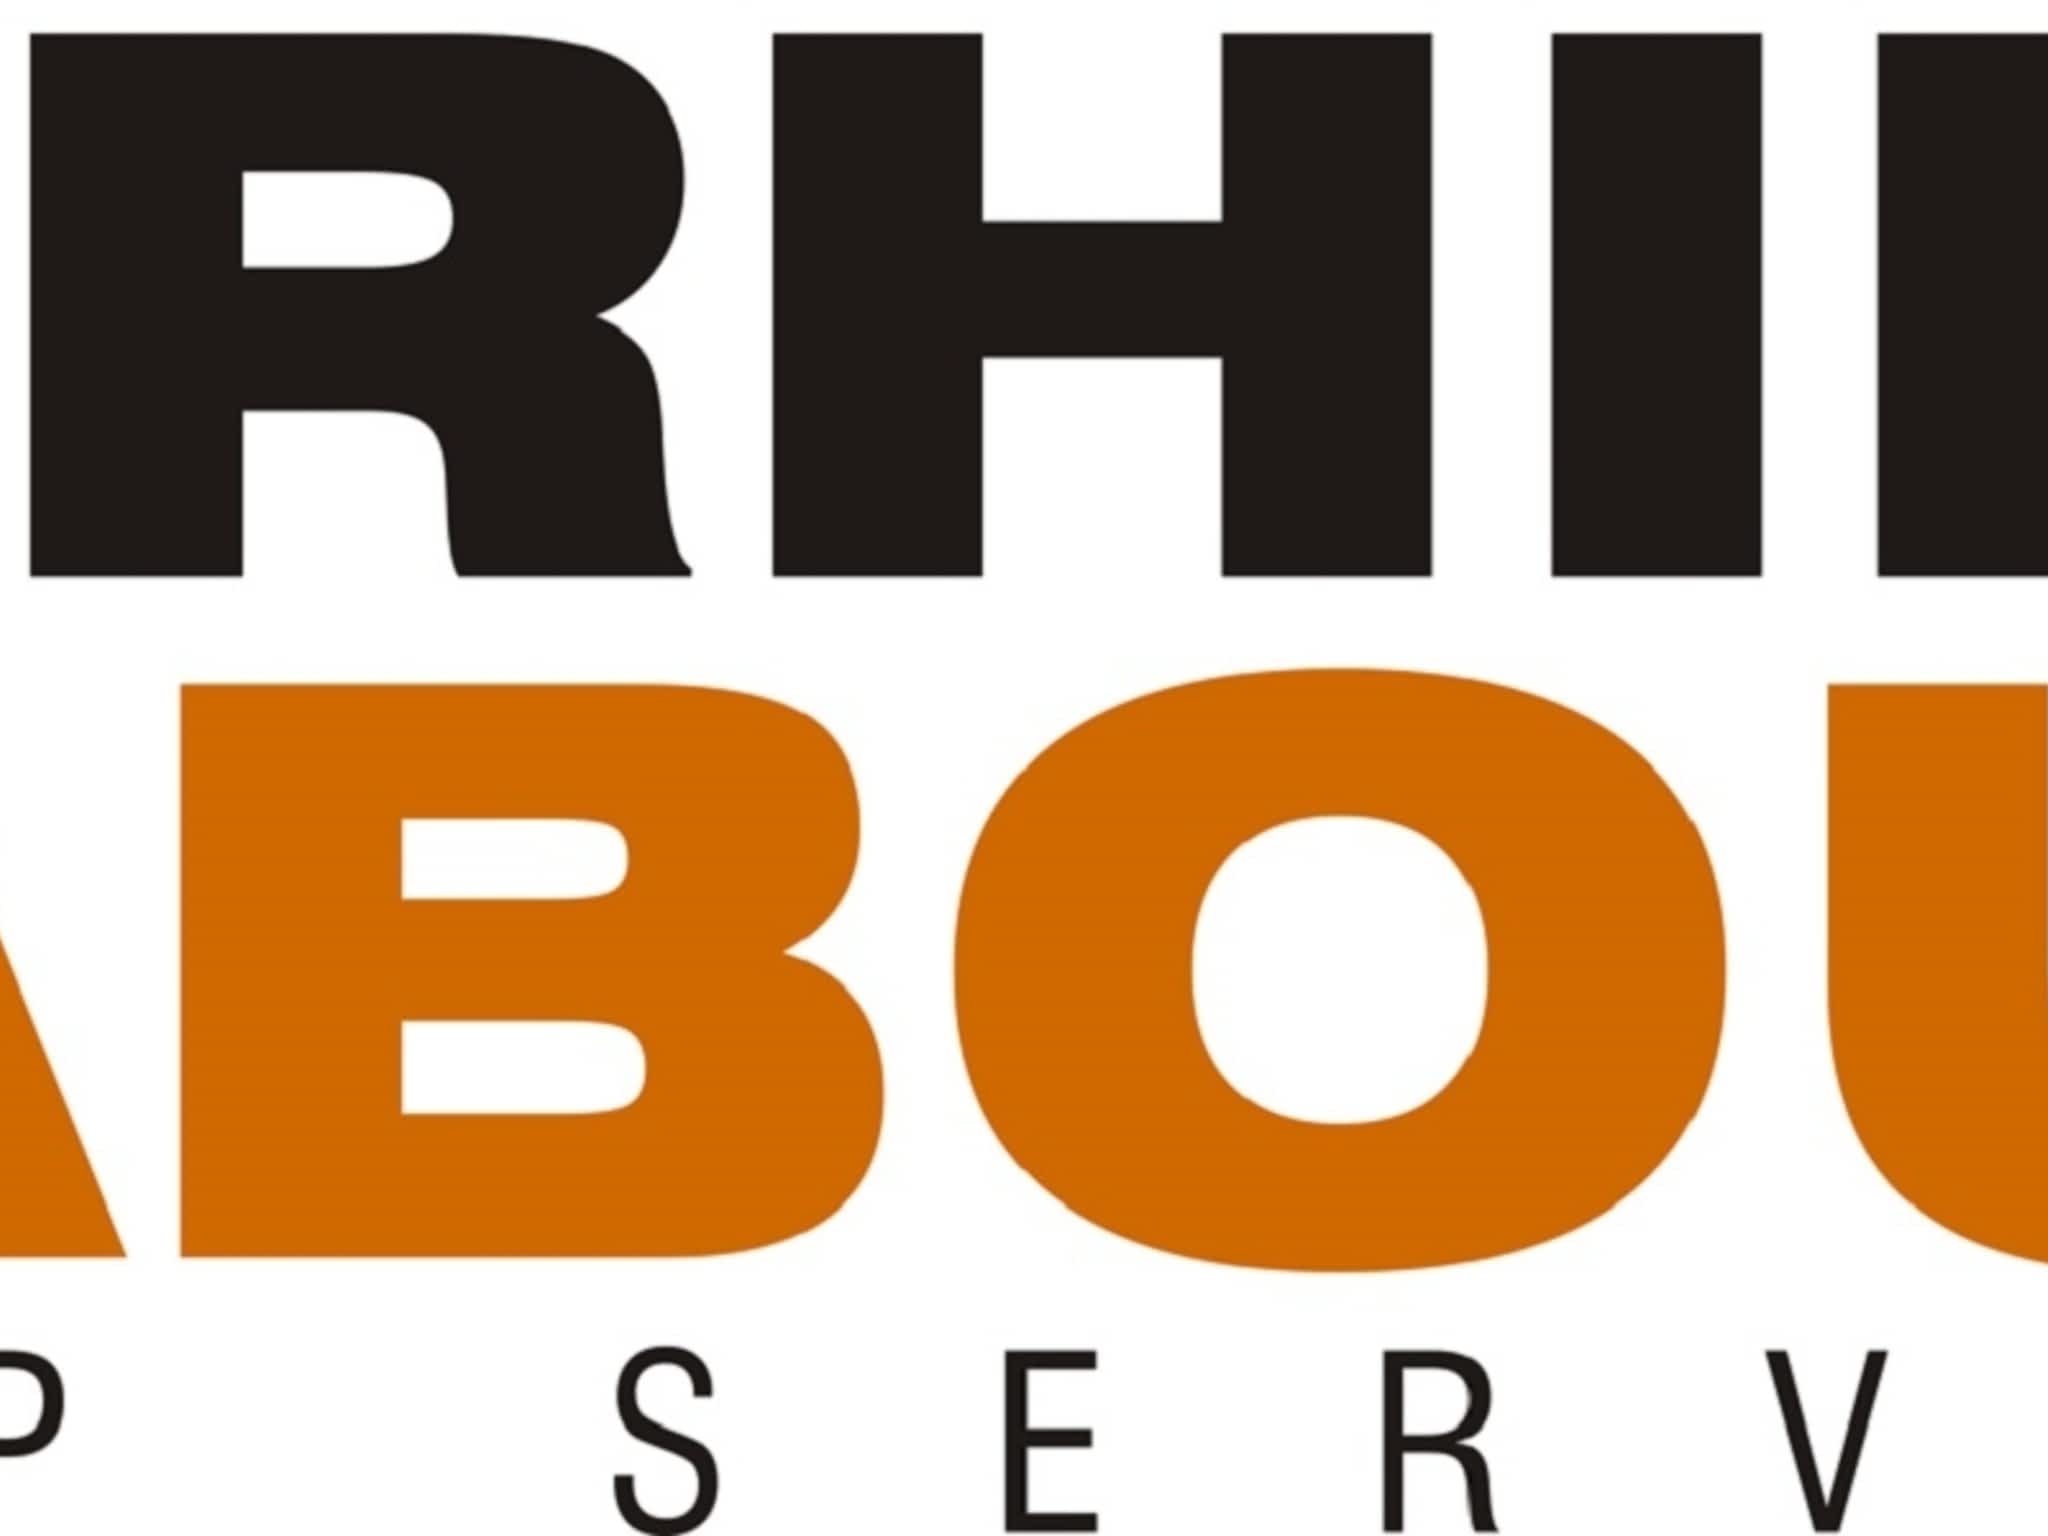 photo Rhino Labour Temp Services Ltd